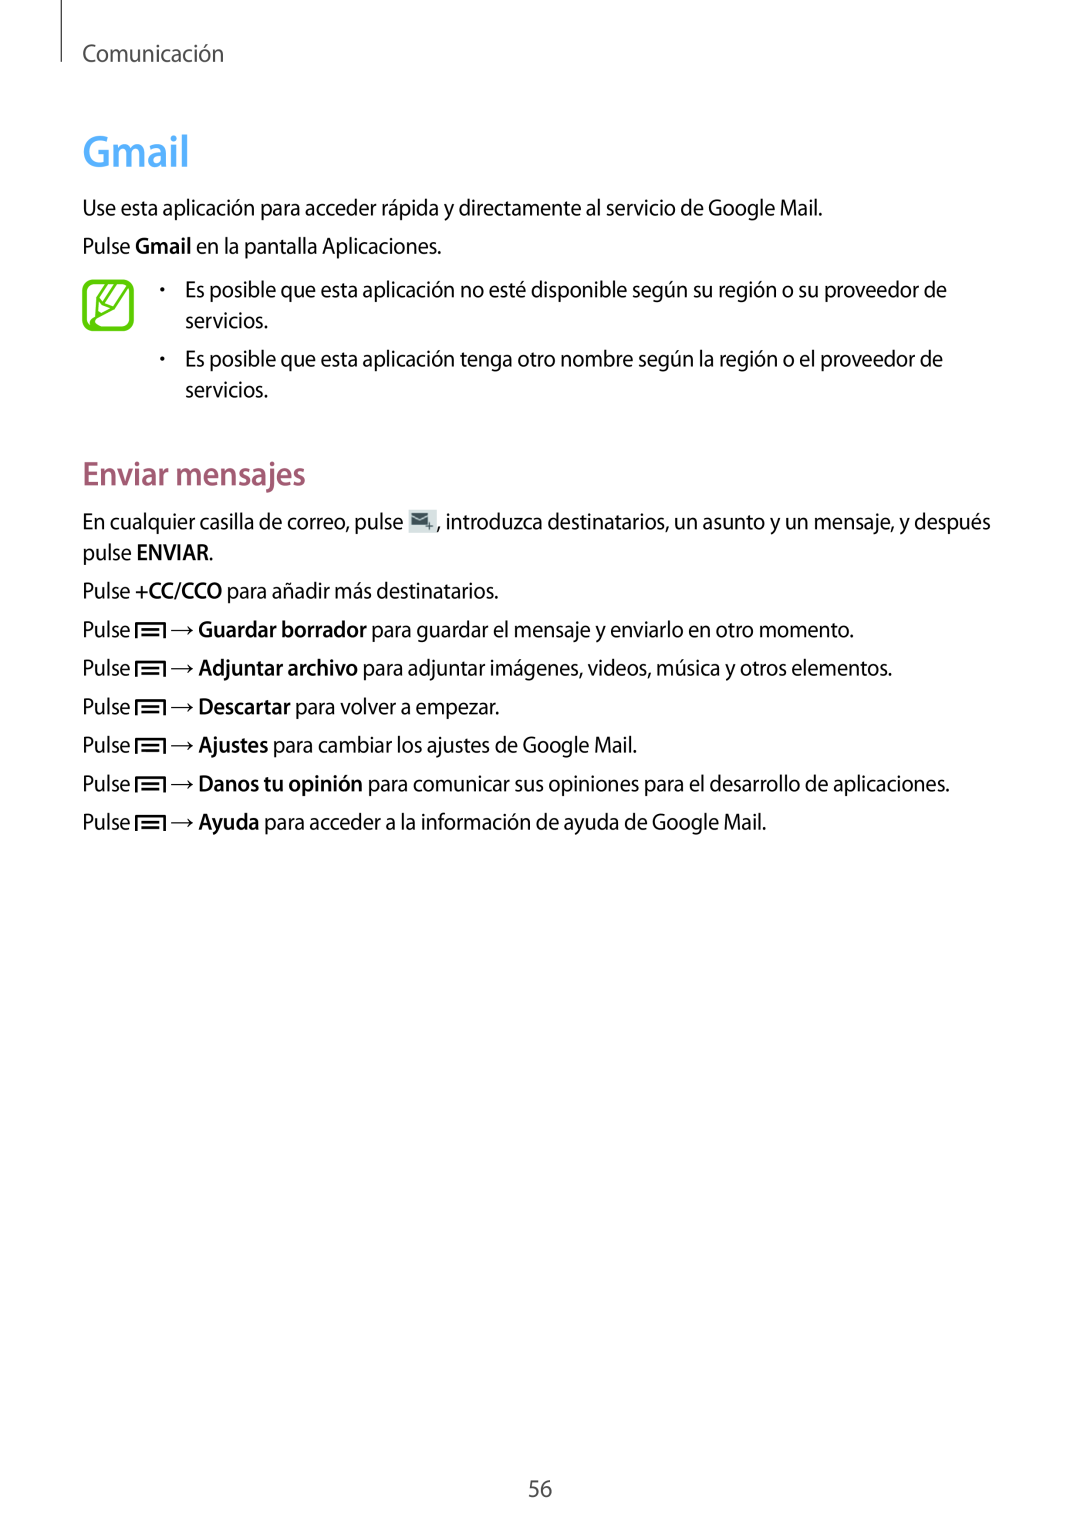 Samsung SM-T3150ZWAATL manual Gmail, Enviar mensajes, Comunicación 